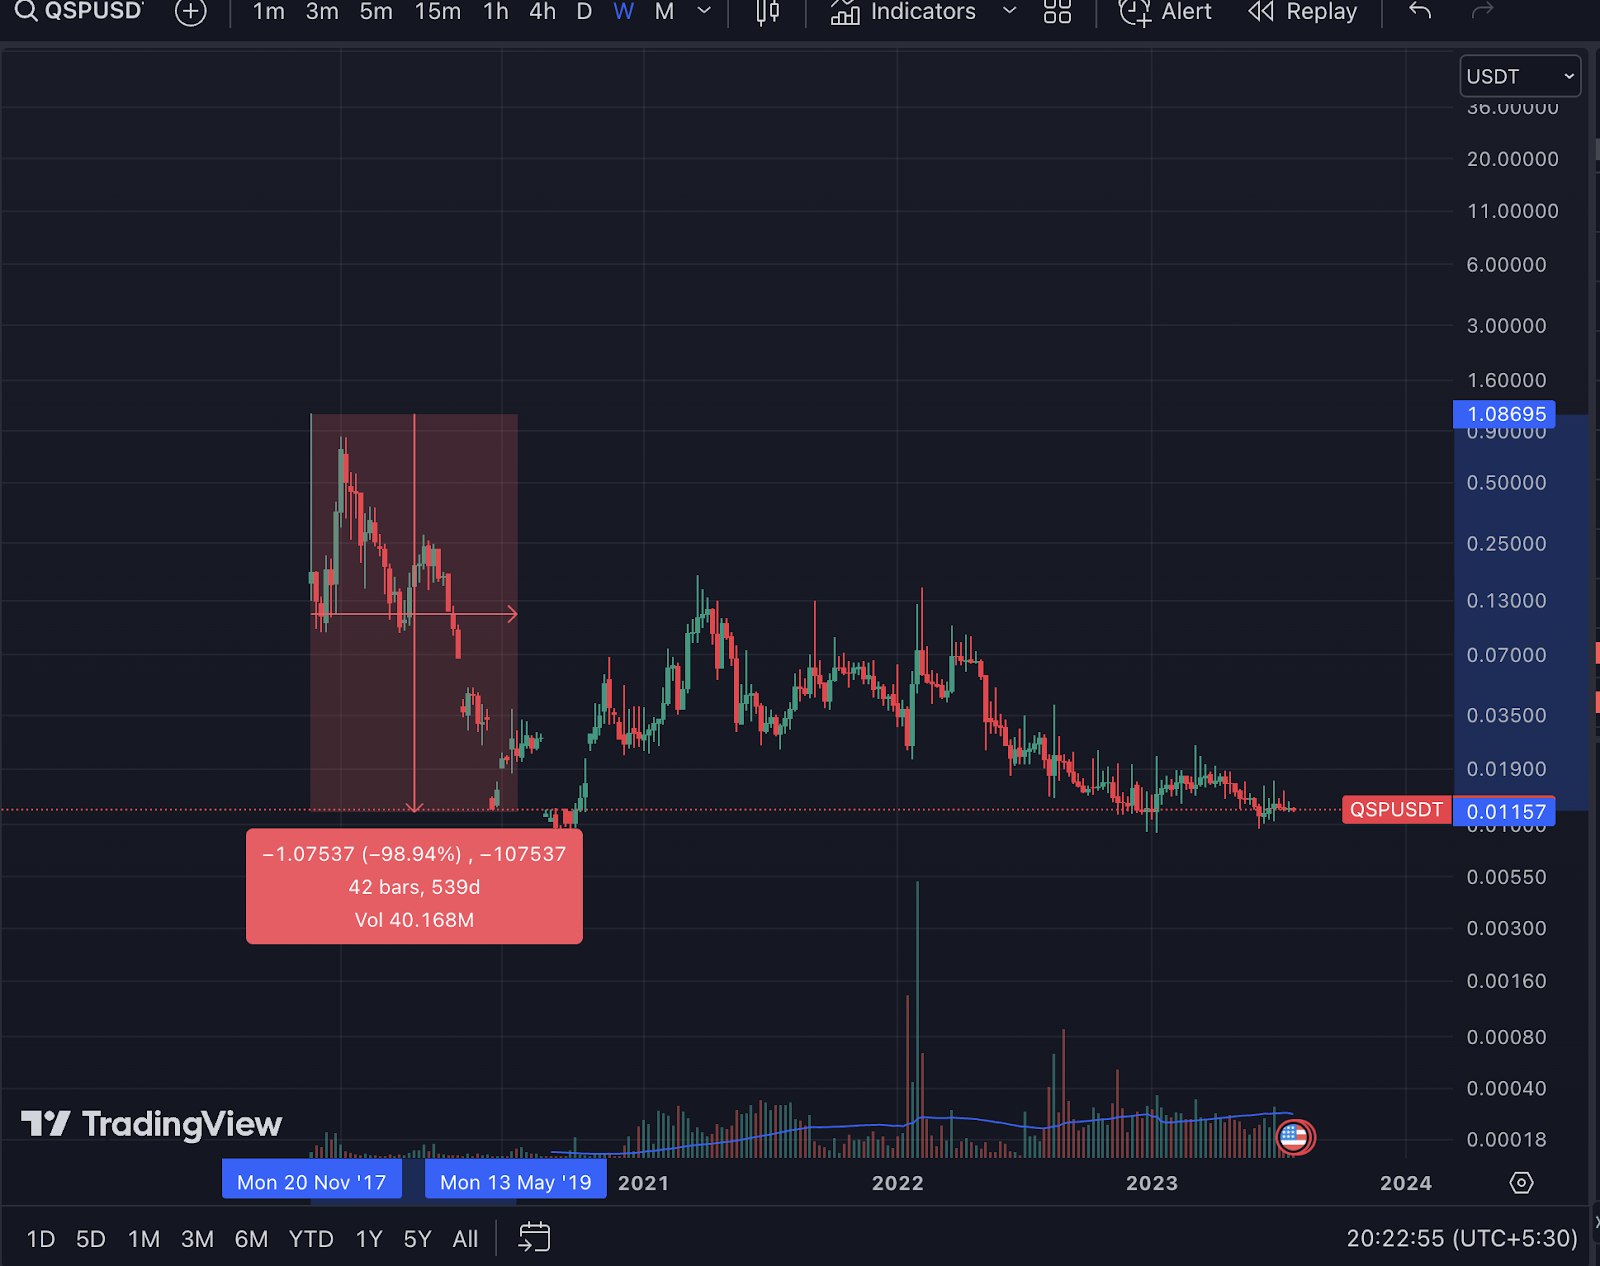 QSPUSD chart from Gate.io. Source TradingView